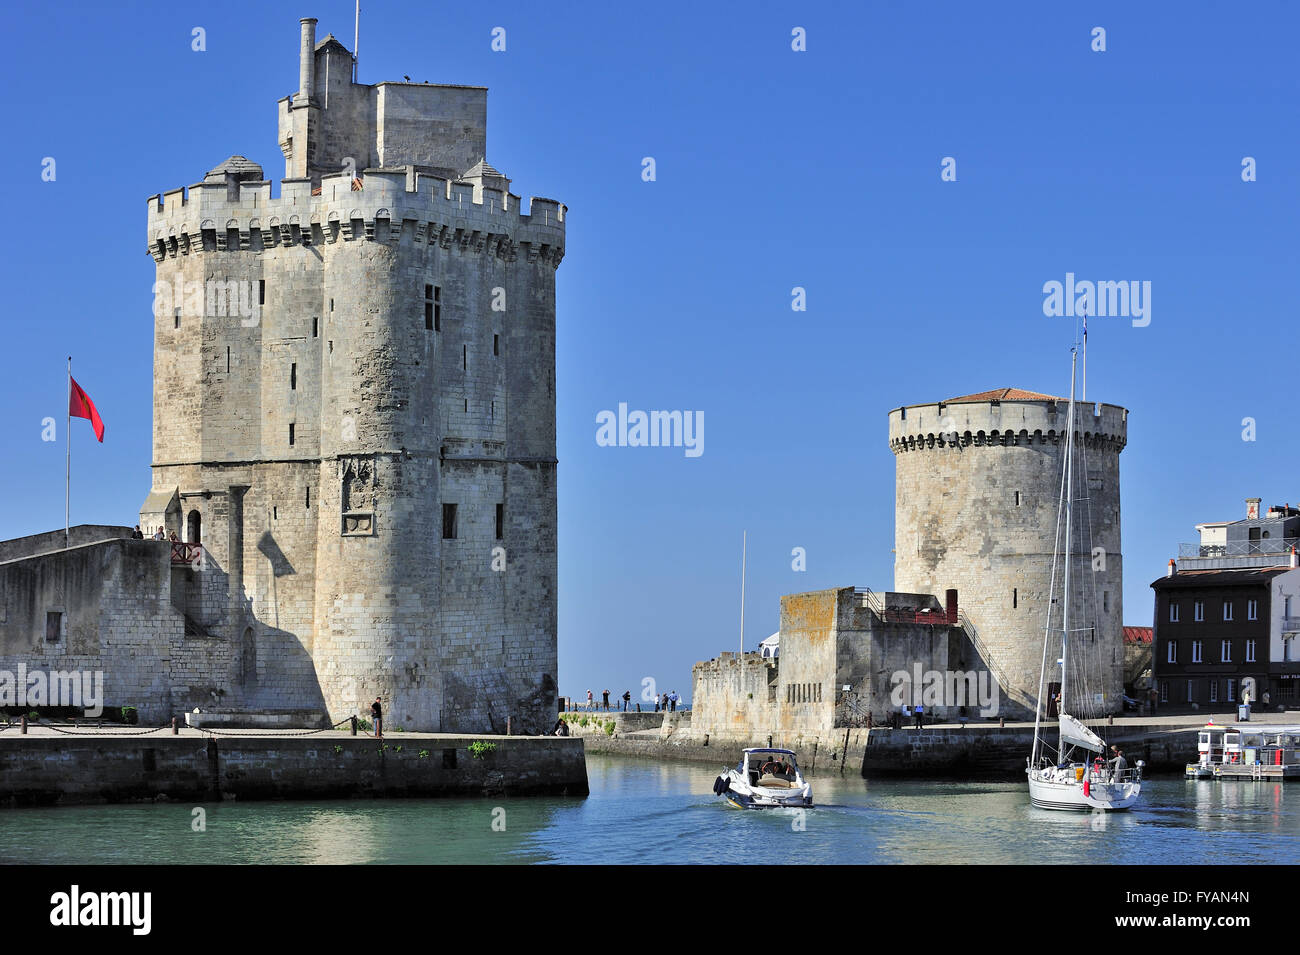 Die Türme tour De La Chaîne und tour Saint-Nicolas im alten Hafen / Vieux Port in La Rochelle, Charente-Maritime, Frankreich Stockfoto